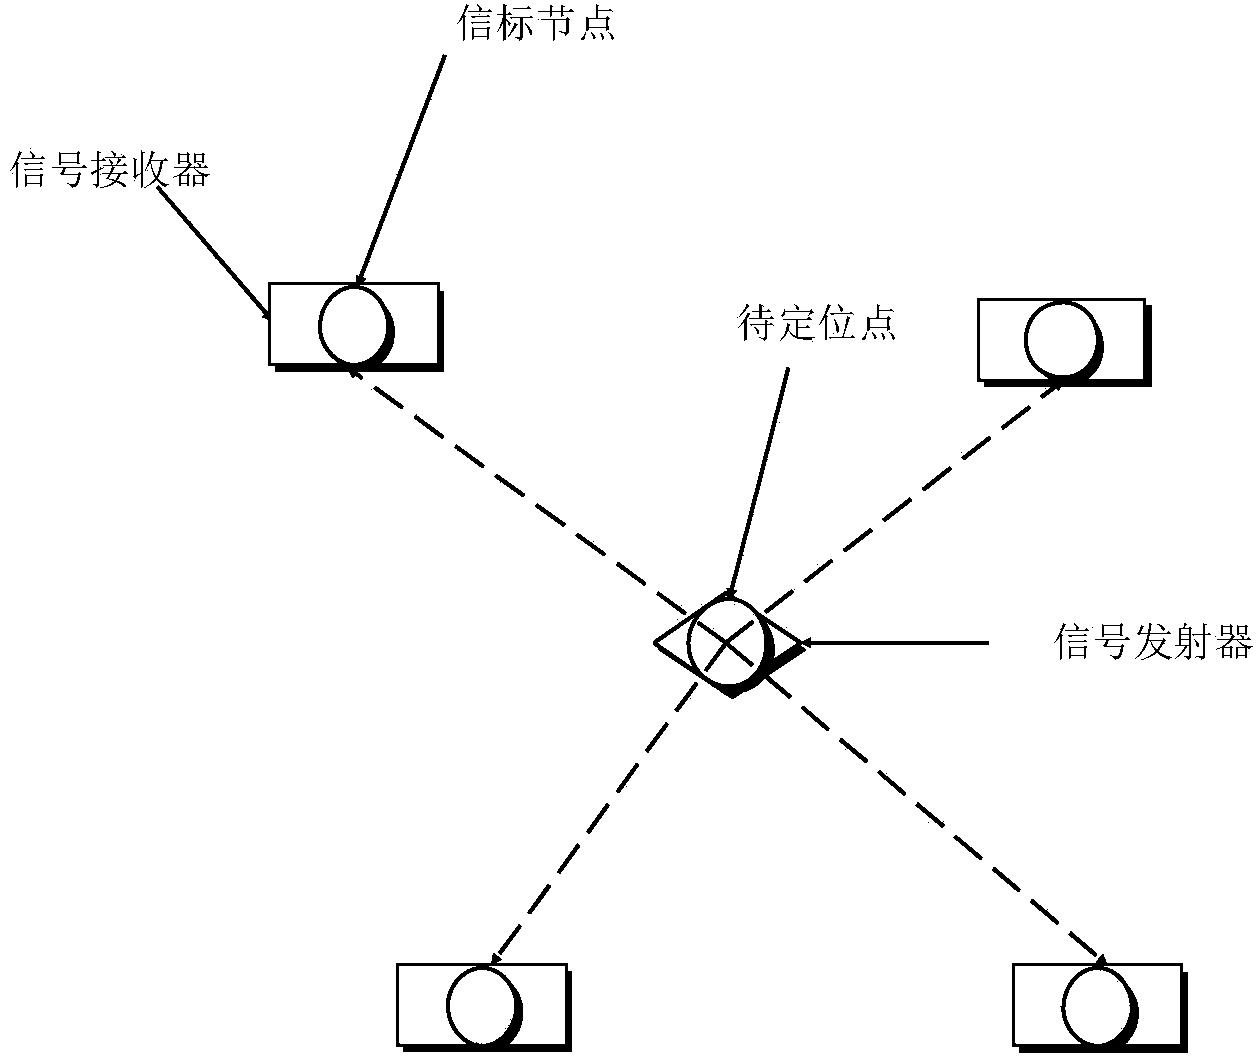 RBF neural network indoor positioning method based on sample clustering